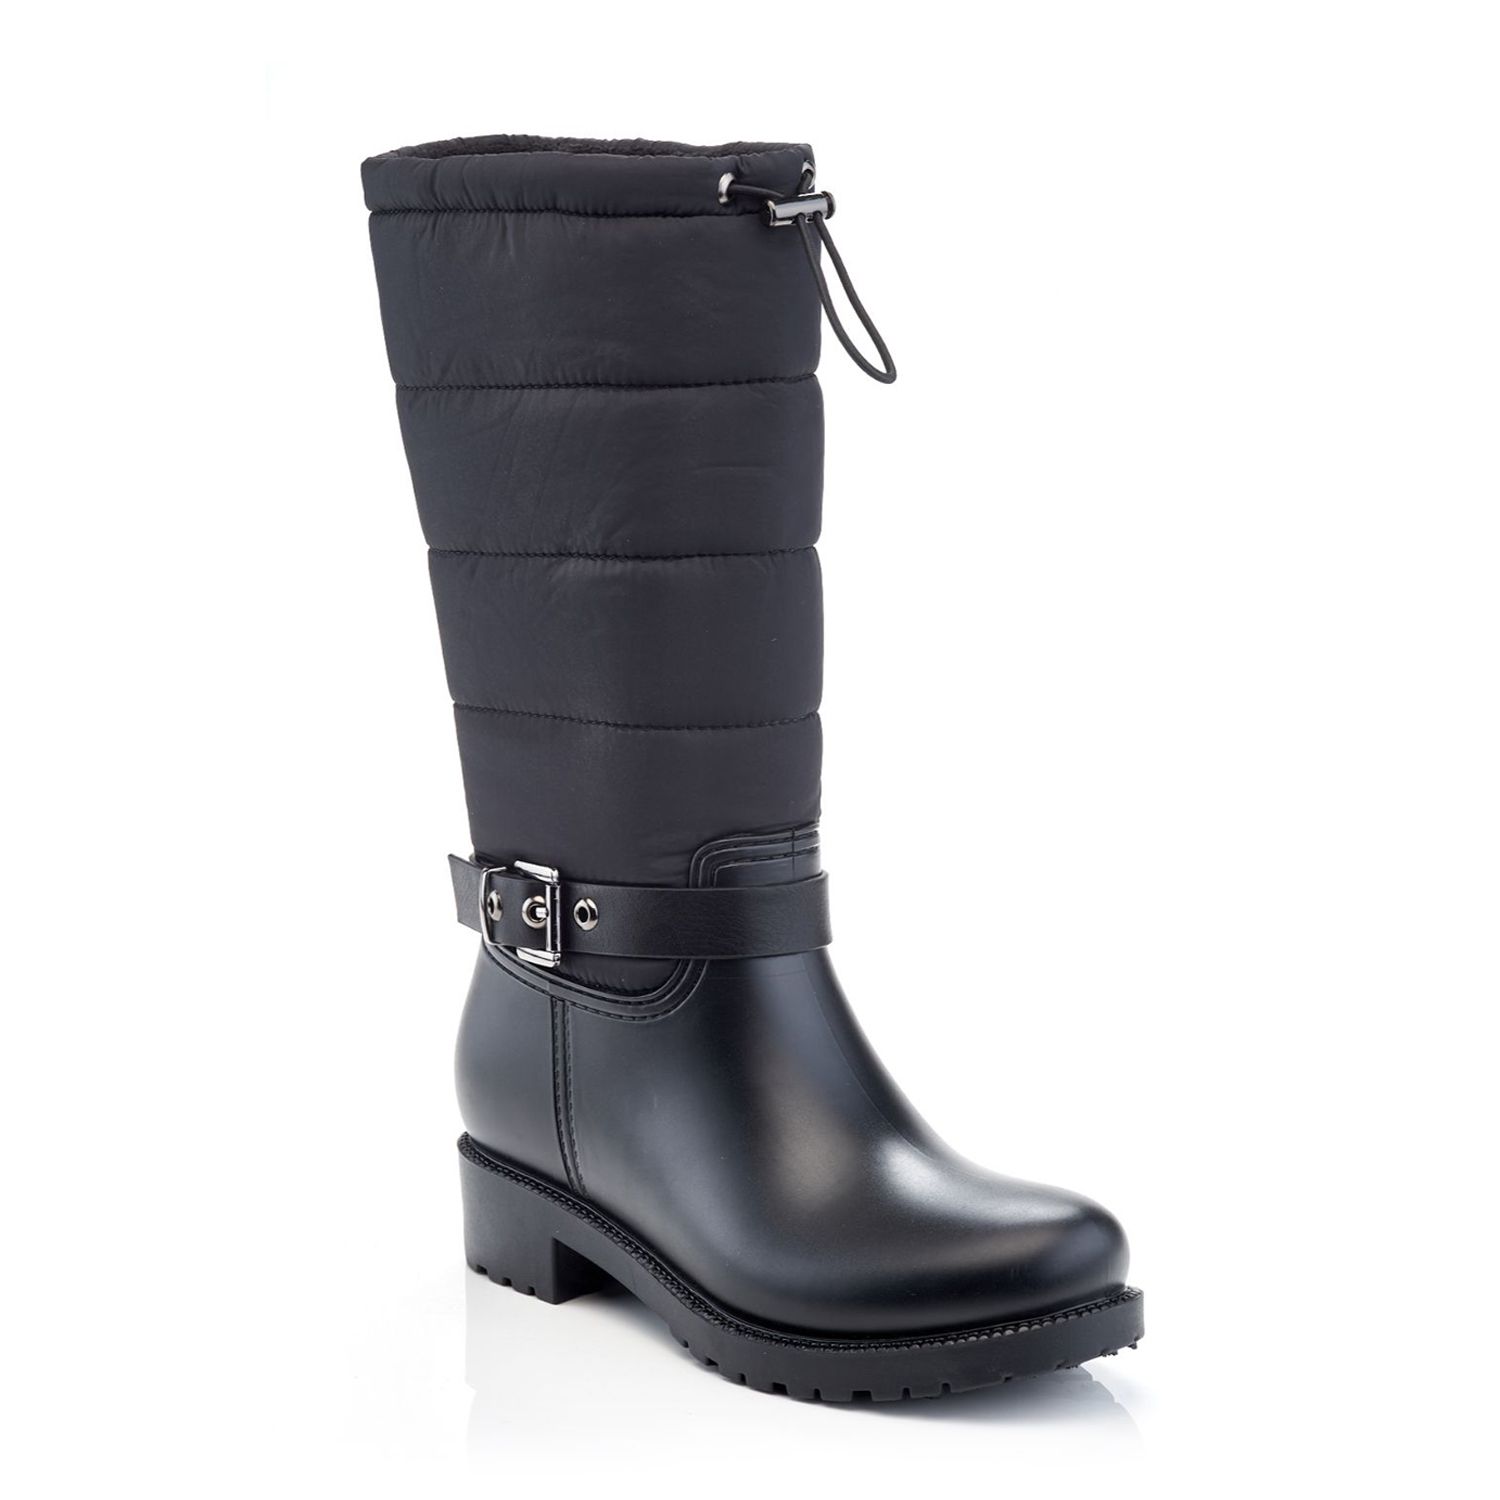 Image for Henry Ferrera Mindy-26 Women's Black Matte Rain Boots at Kohl's.